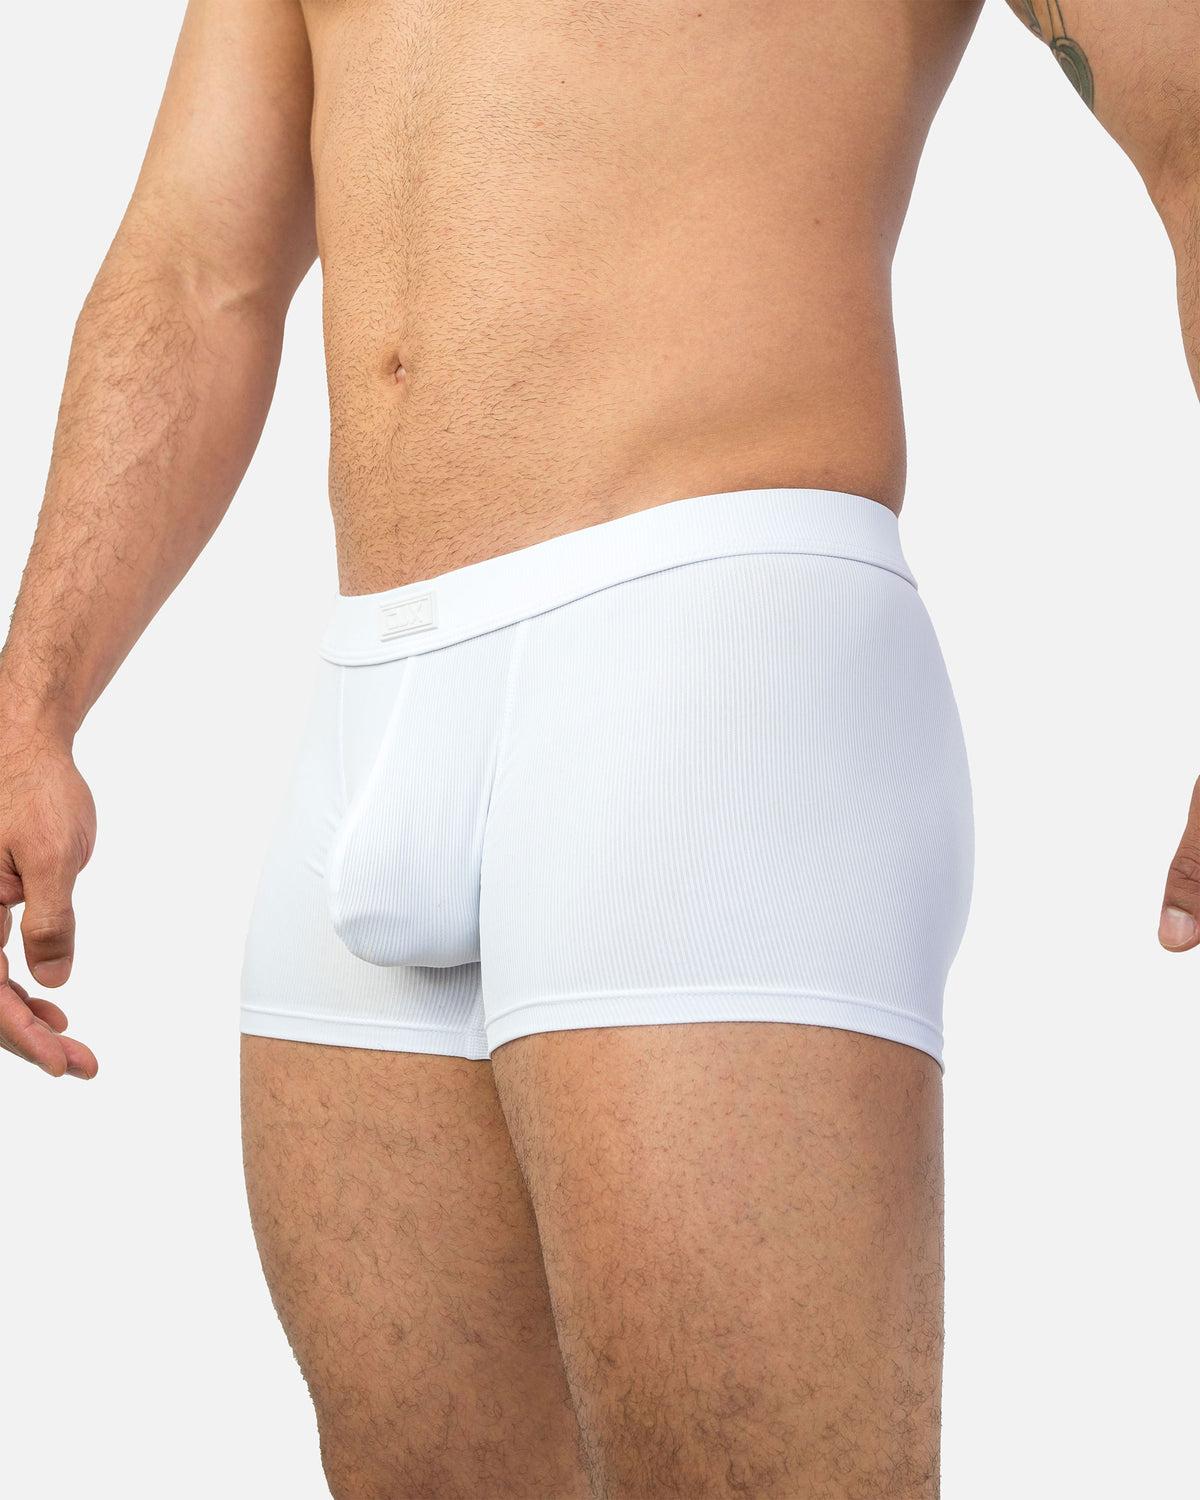 PUMP! Underwear • EU Online Shop • Sporty Boxers, Sexy Jocks & more